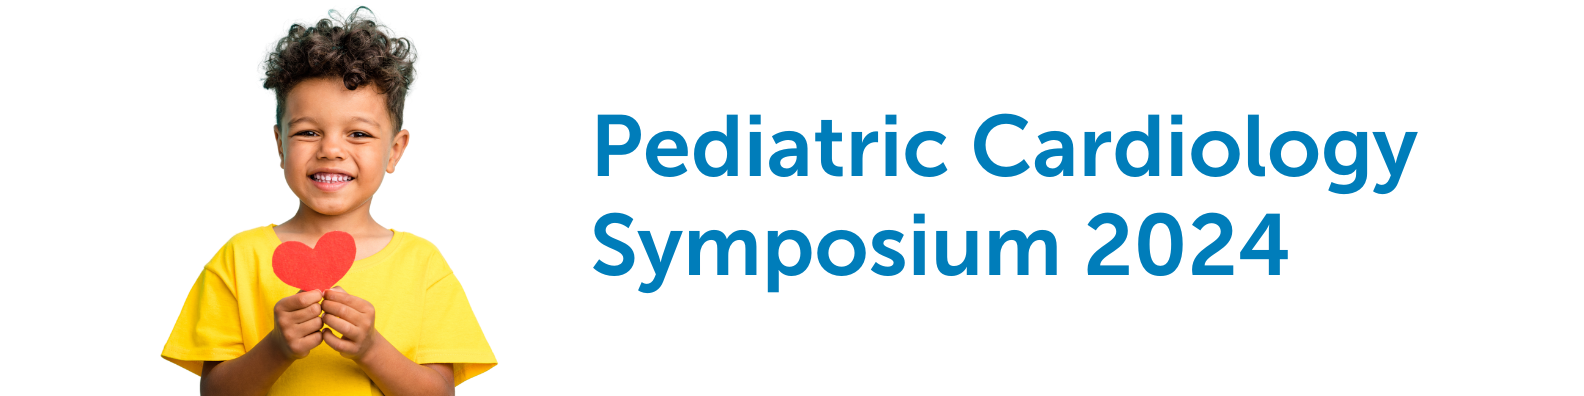 Pediatric Cardiology Symposium 2024 Banner